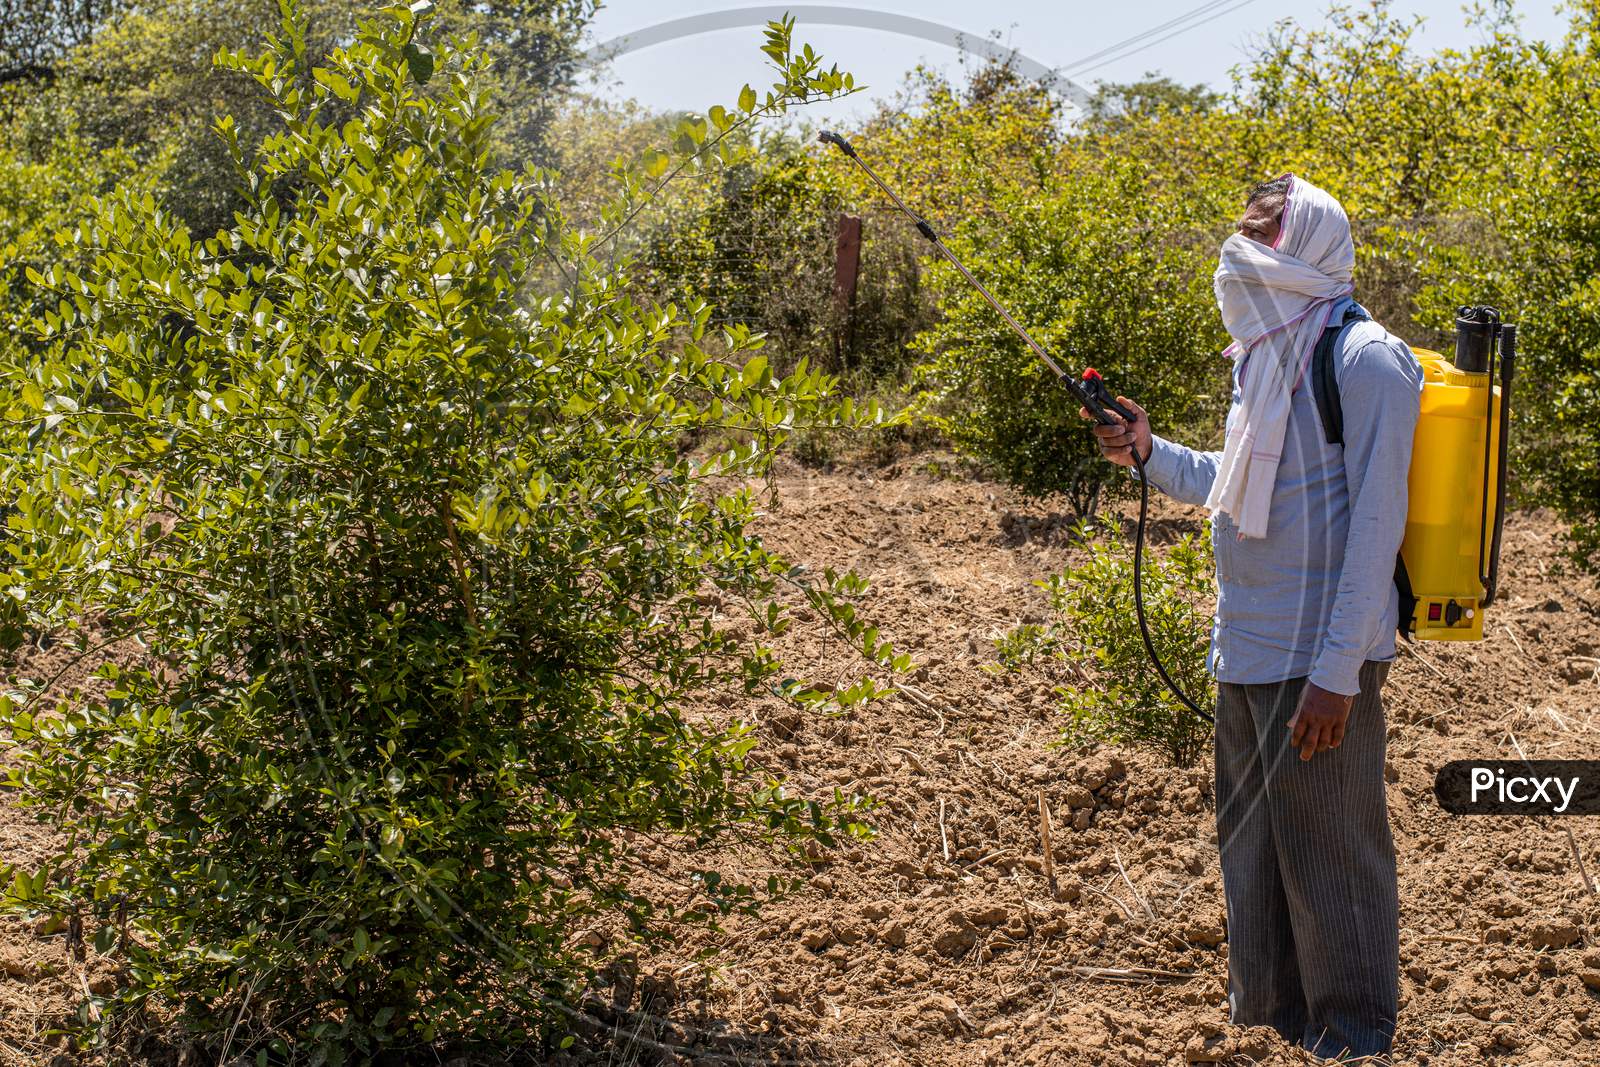 A farmer spraying pesticides using sprayer machine on the lemon trees